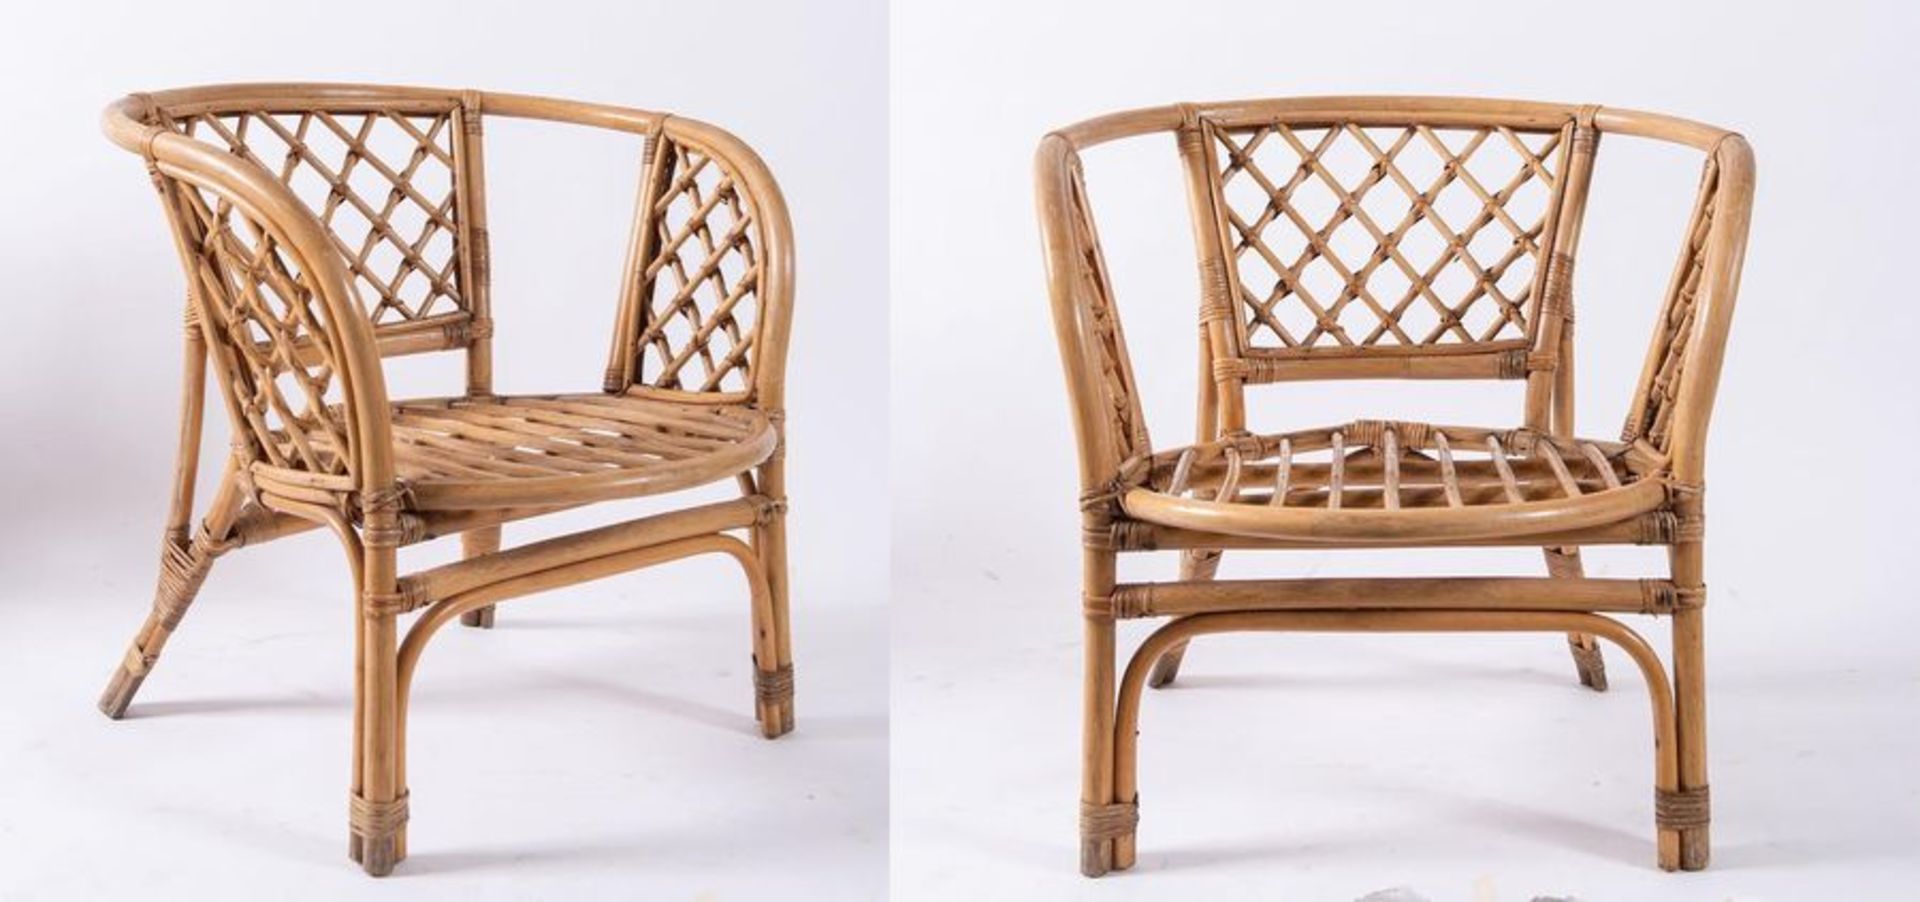 Coppia di sedie in vimini e bamboo. Prod. Italia, 1970 ca. Cadauna di cm 72x70x66.